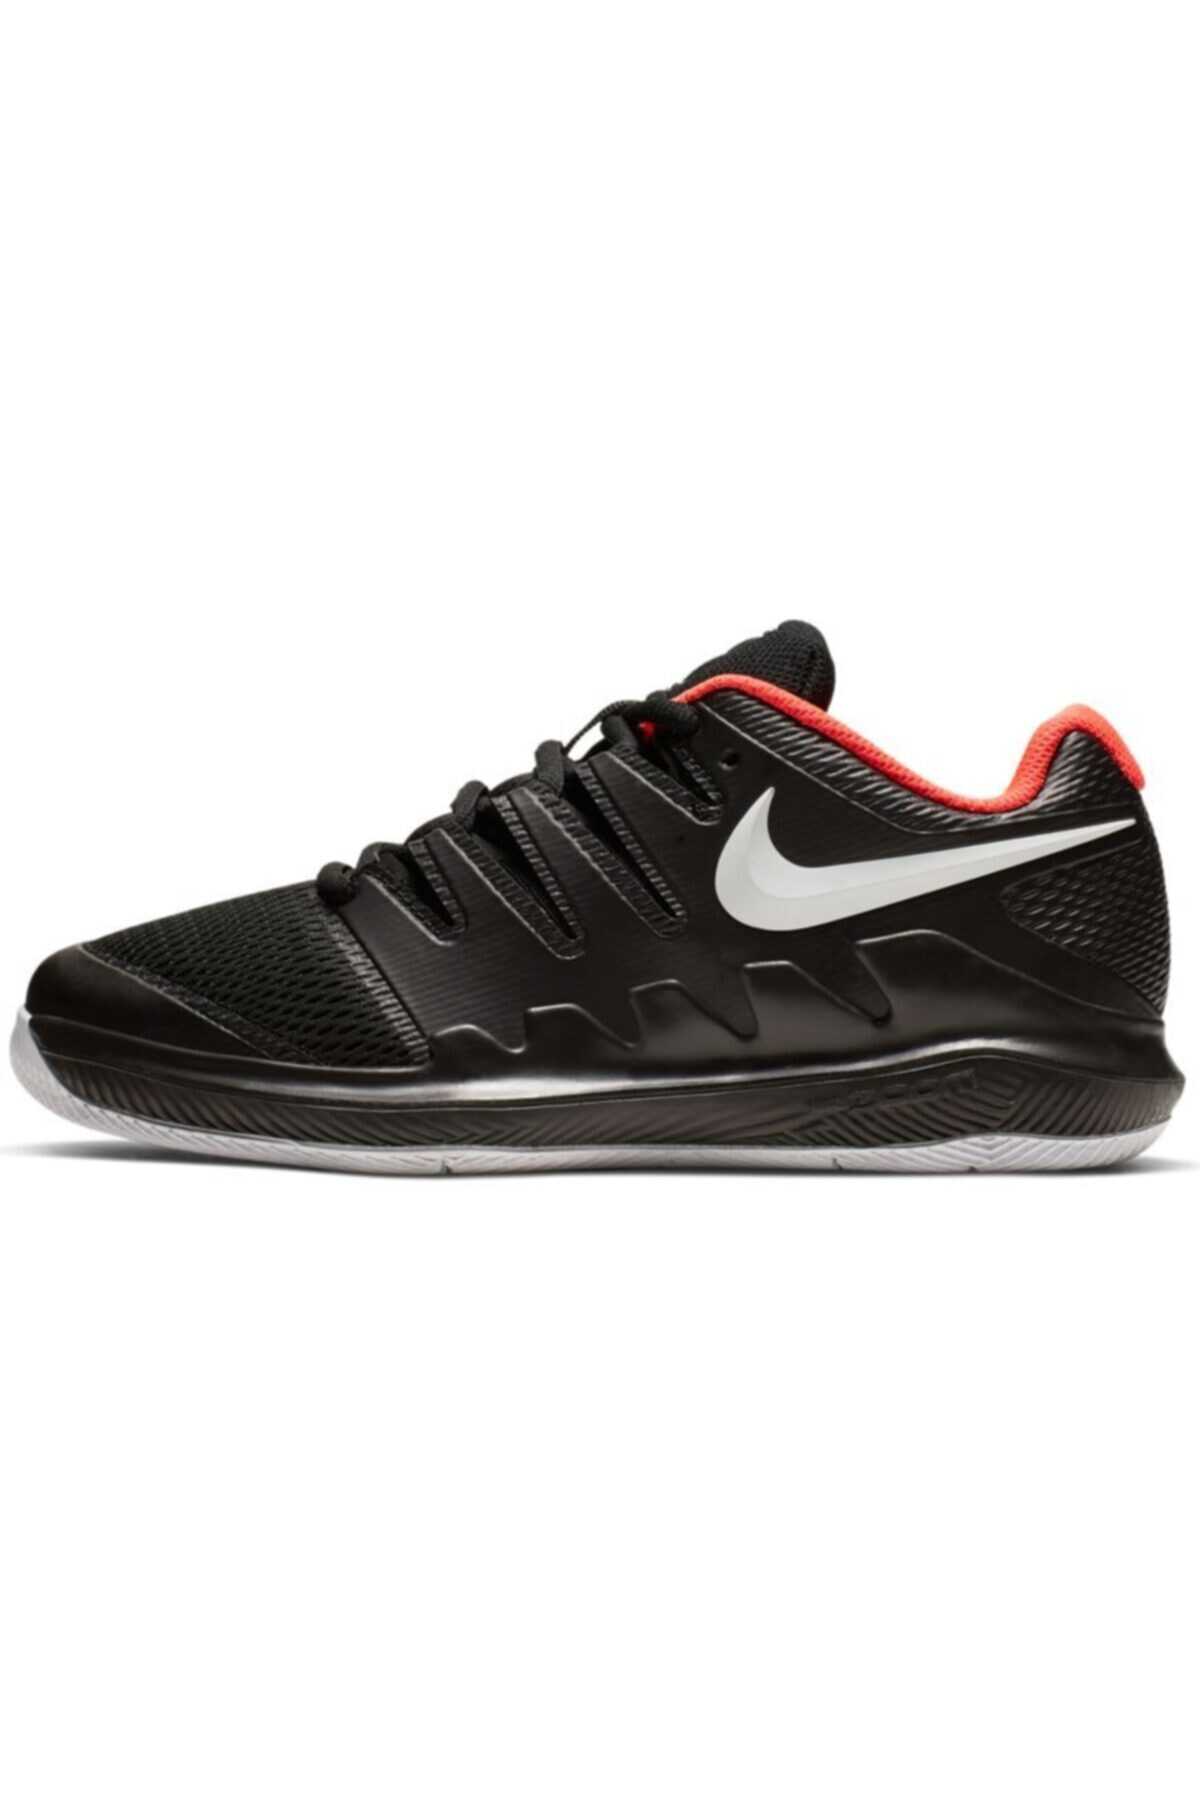 کفش تنیس یونیسکس مشکی برند Nike 